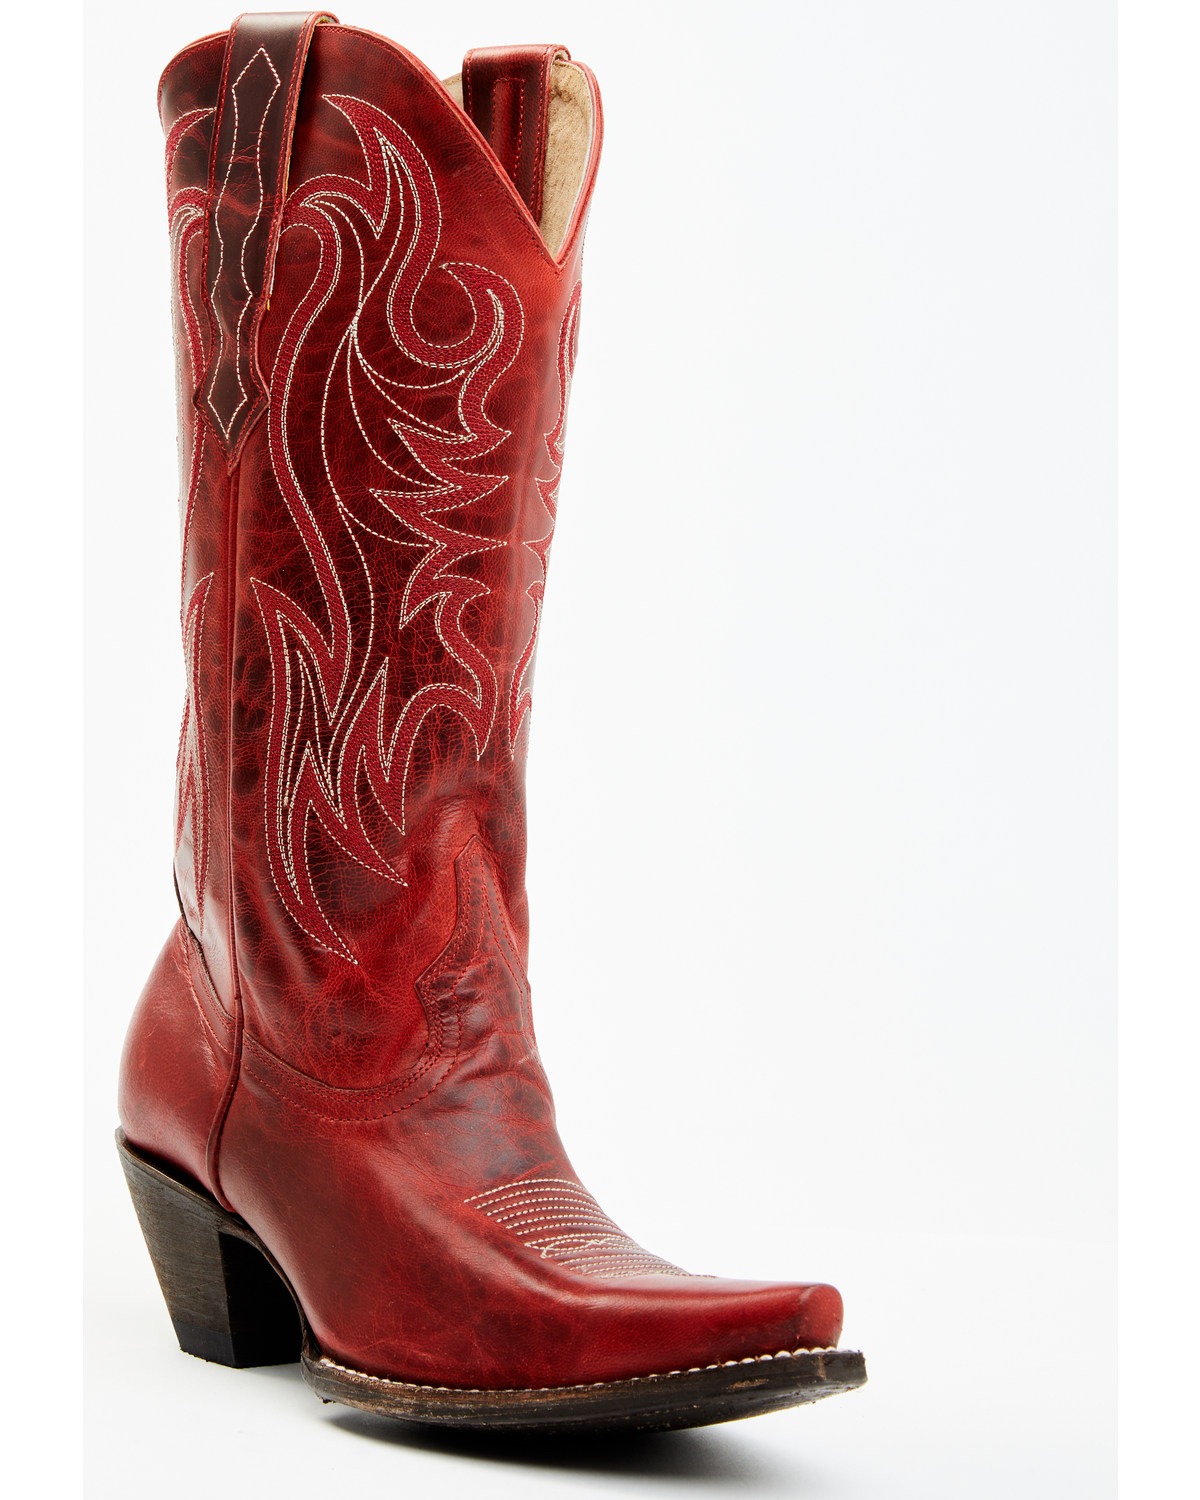 Idyllwind Women's Redhot Western Boots - Snip Toe